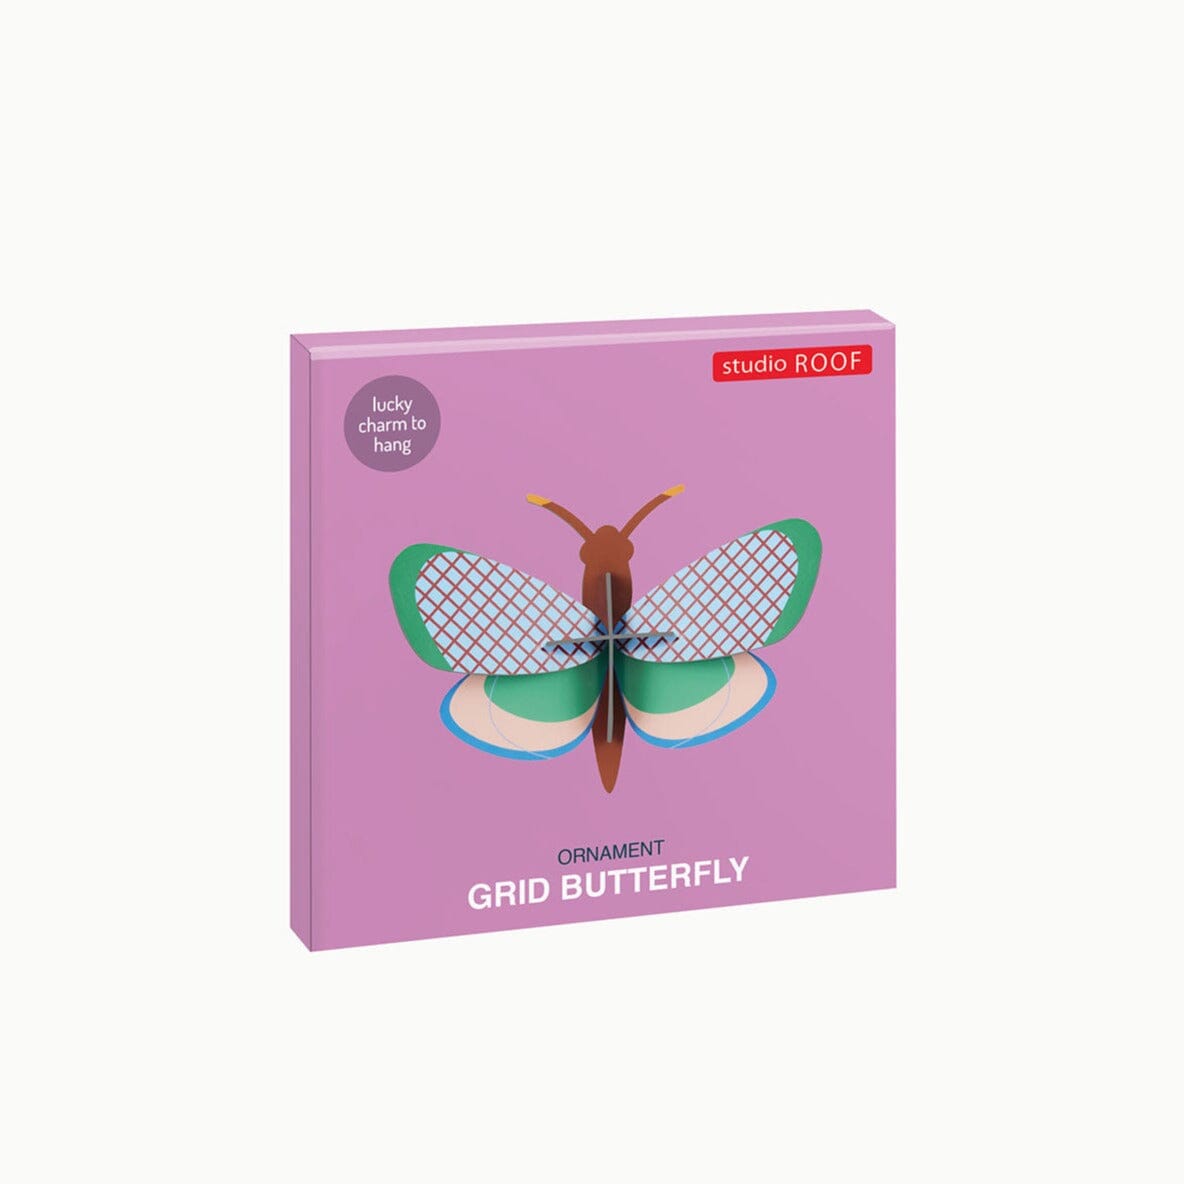 Anhänger "Grid Butterfly" Klappkarte Studio Roof 